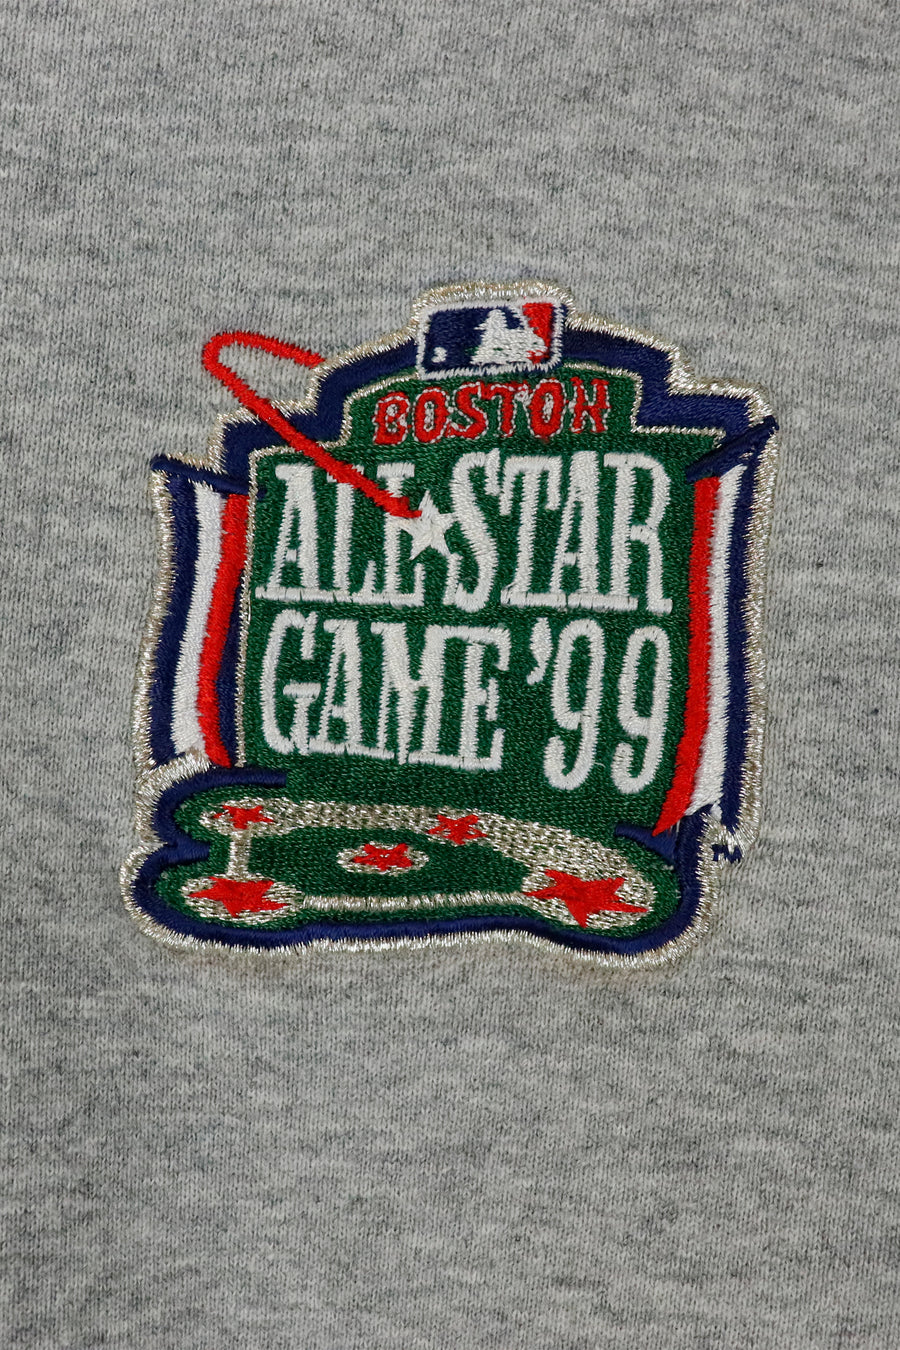 Vintage 1999 MLB Allstar Game Small Embroidered Logo Sweatshirt Sz L